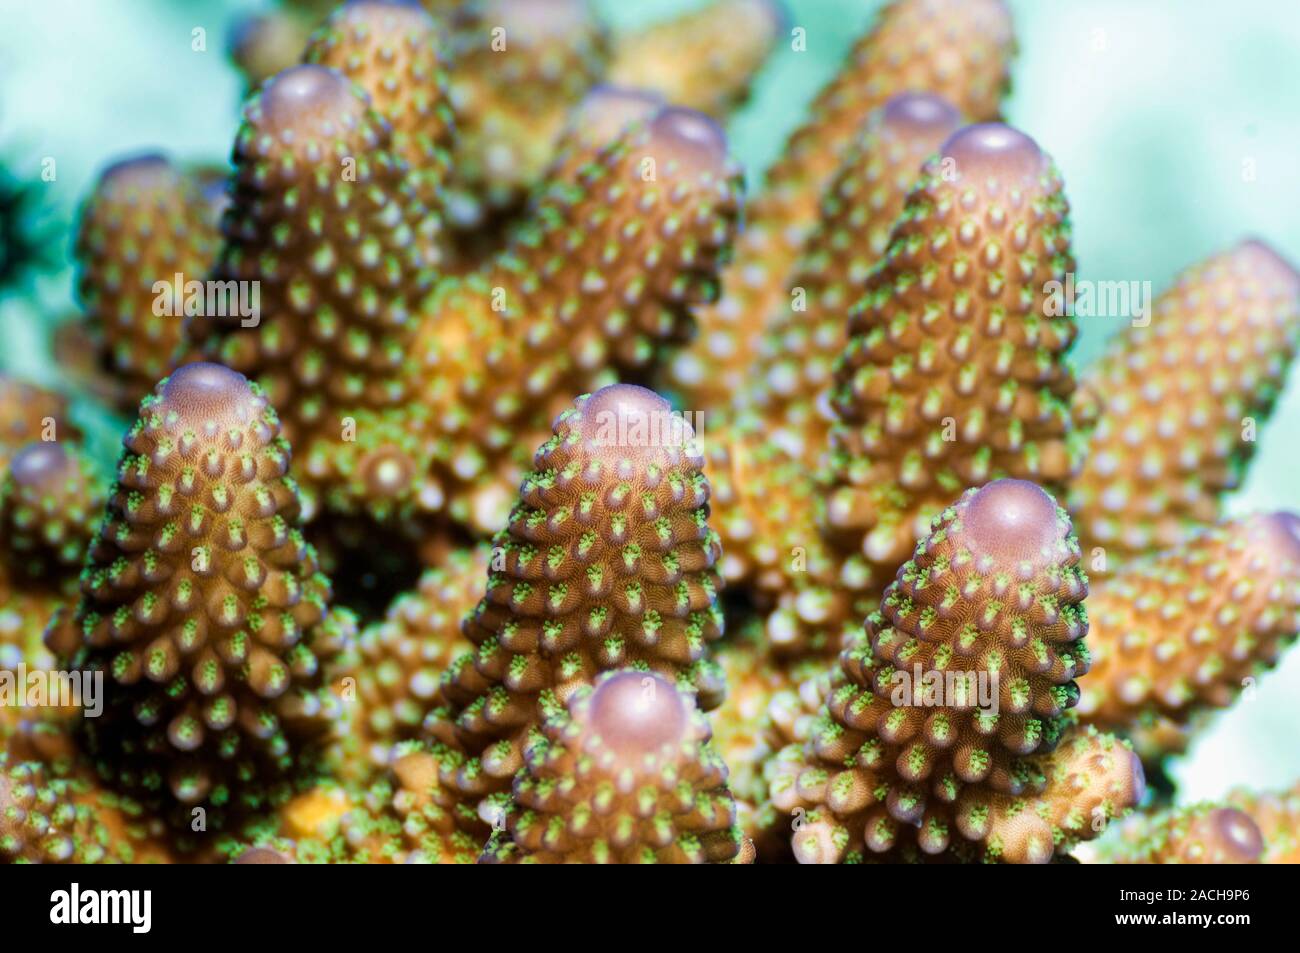 Acropora plate coral polyps. Close-up of polyps from an Acropora ...